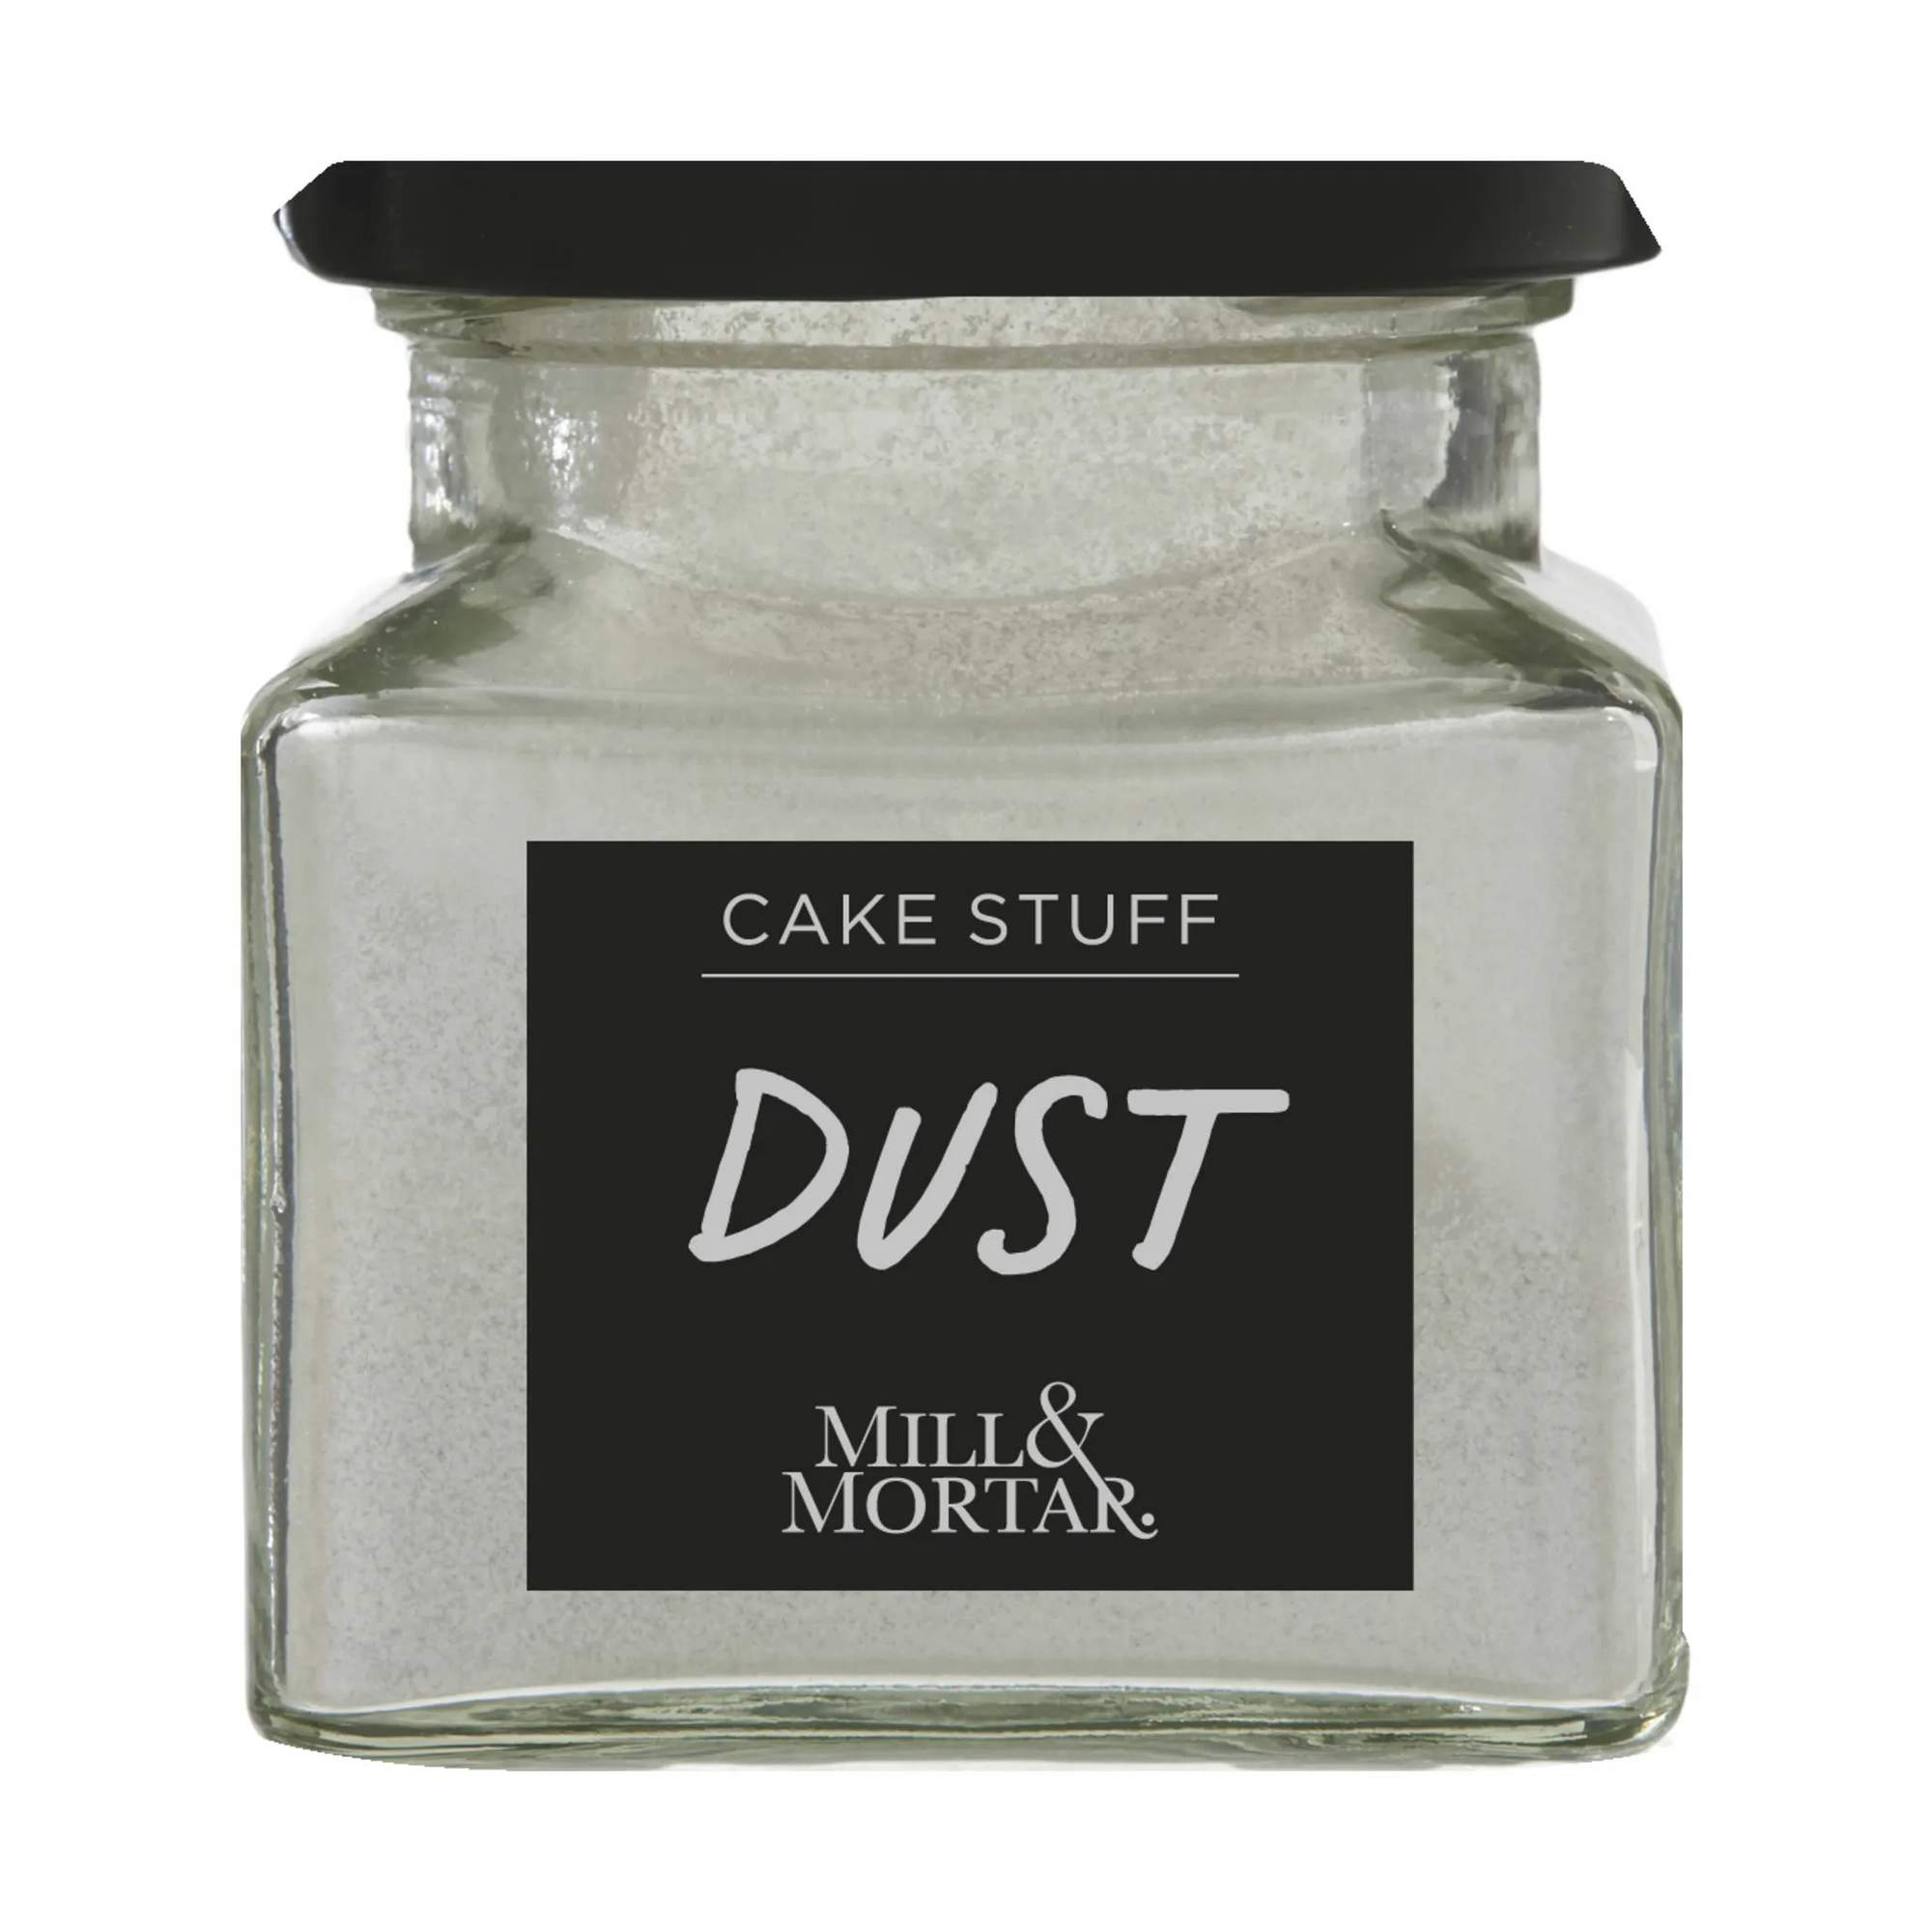 Mill & Mortar kagepynt CakeStuff Dust